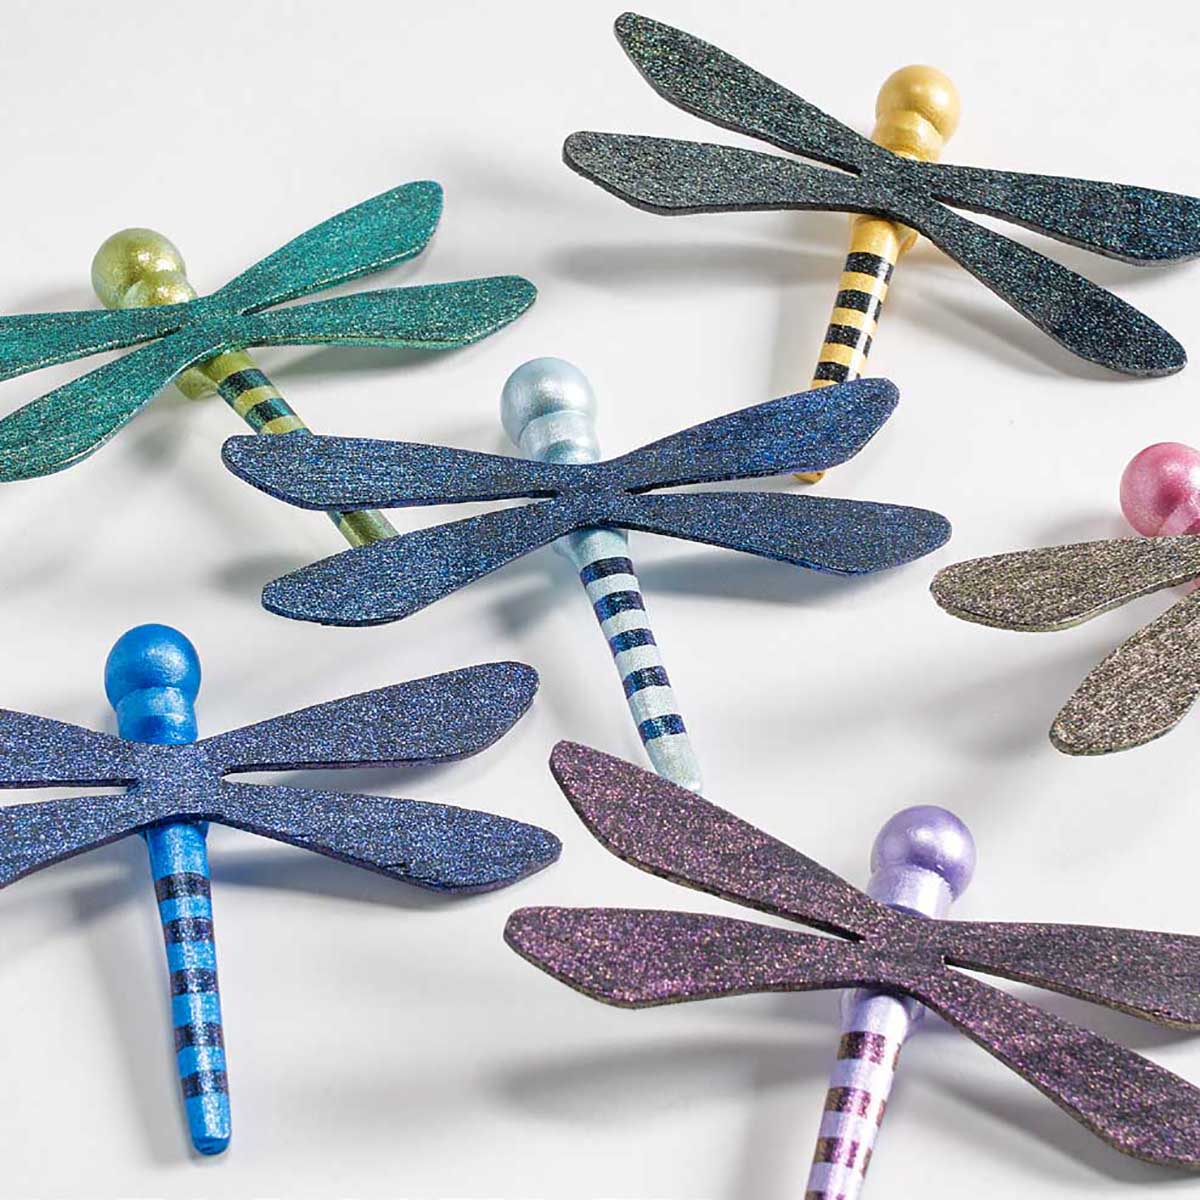 Folkart - Dragonfly Glaze 2oz - Violet-Bleu-Vert Shift